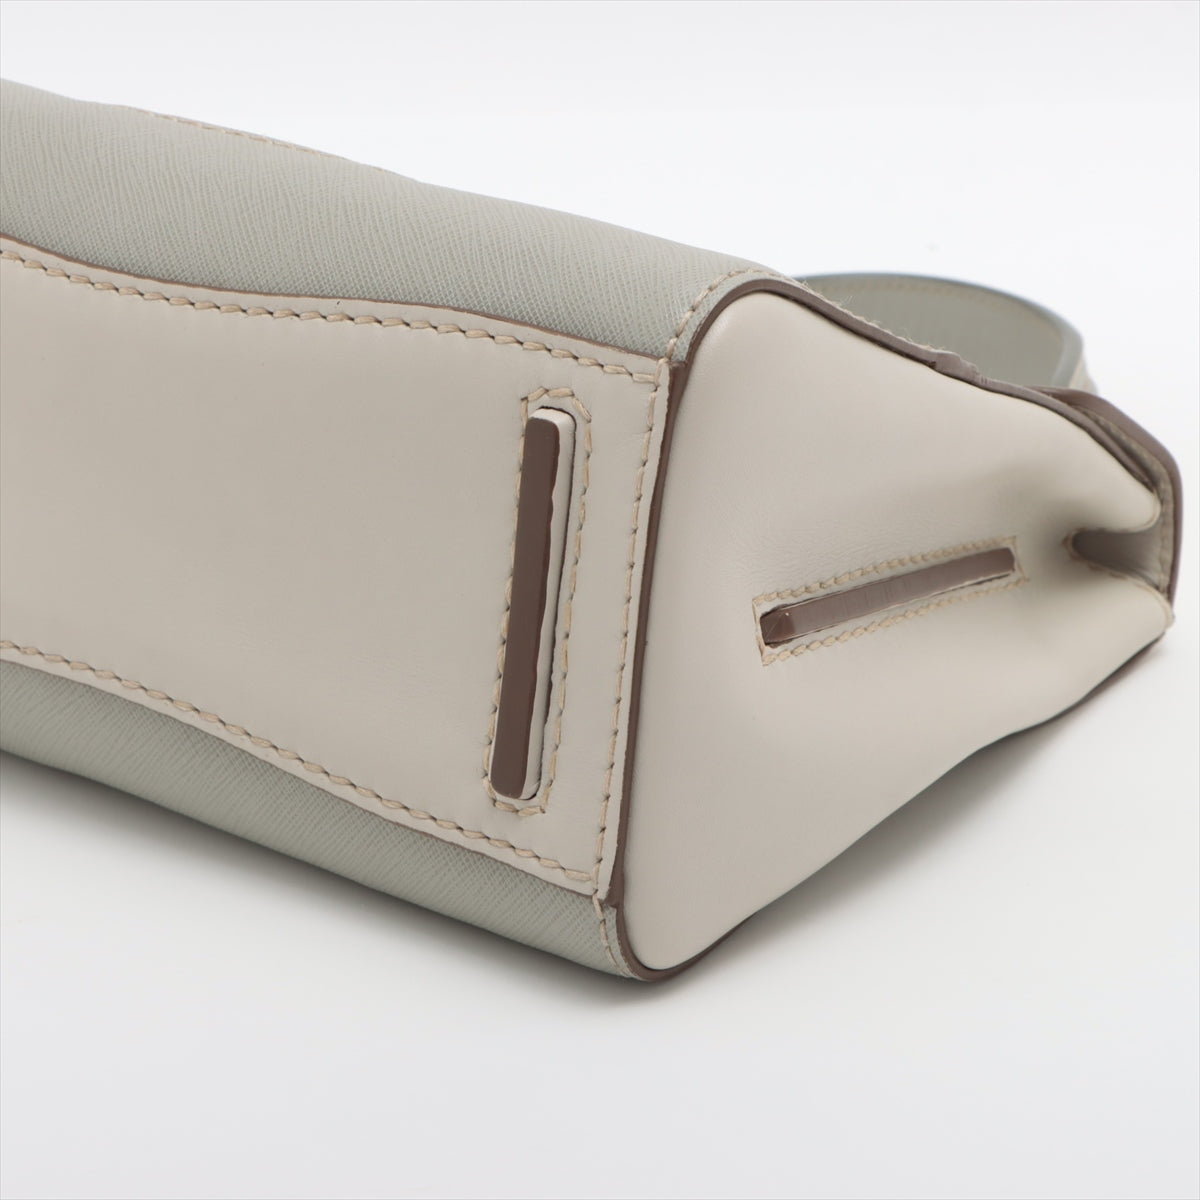 Prada Leather Hand bag White BN2890